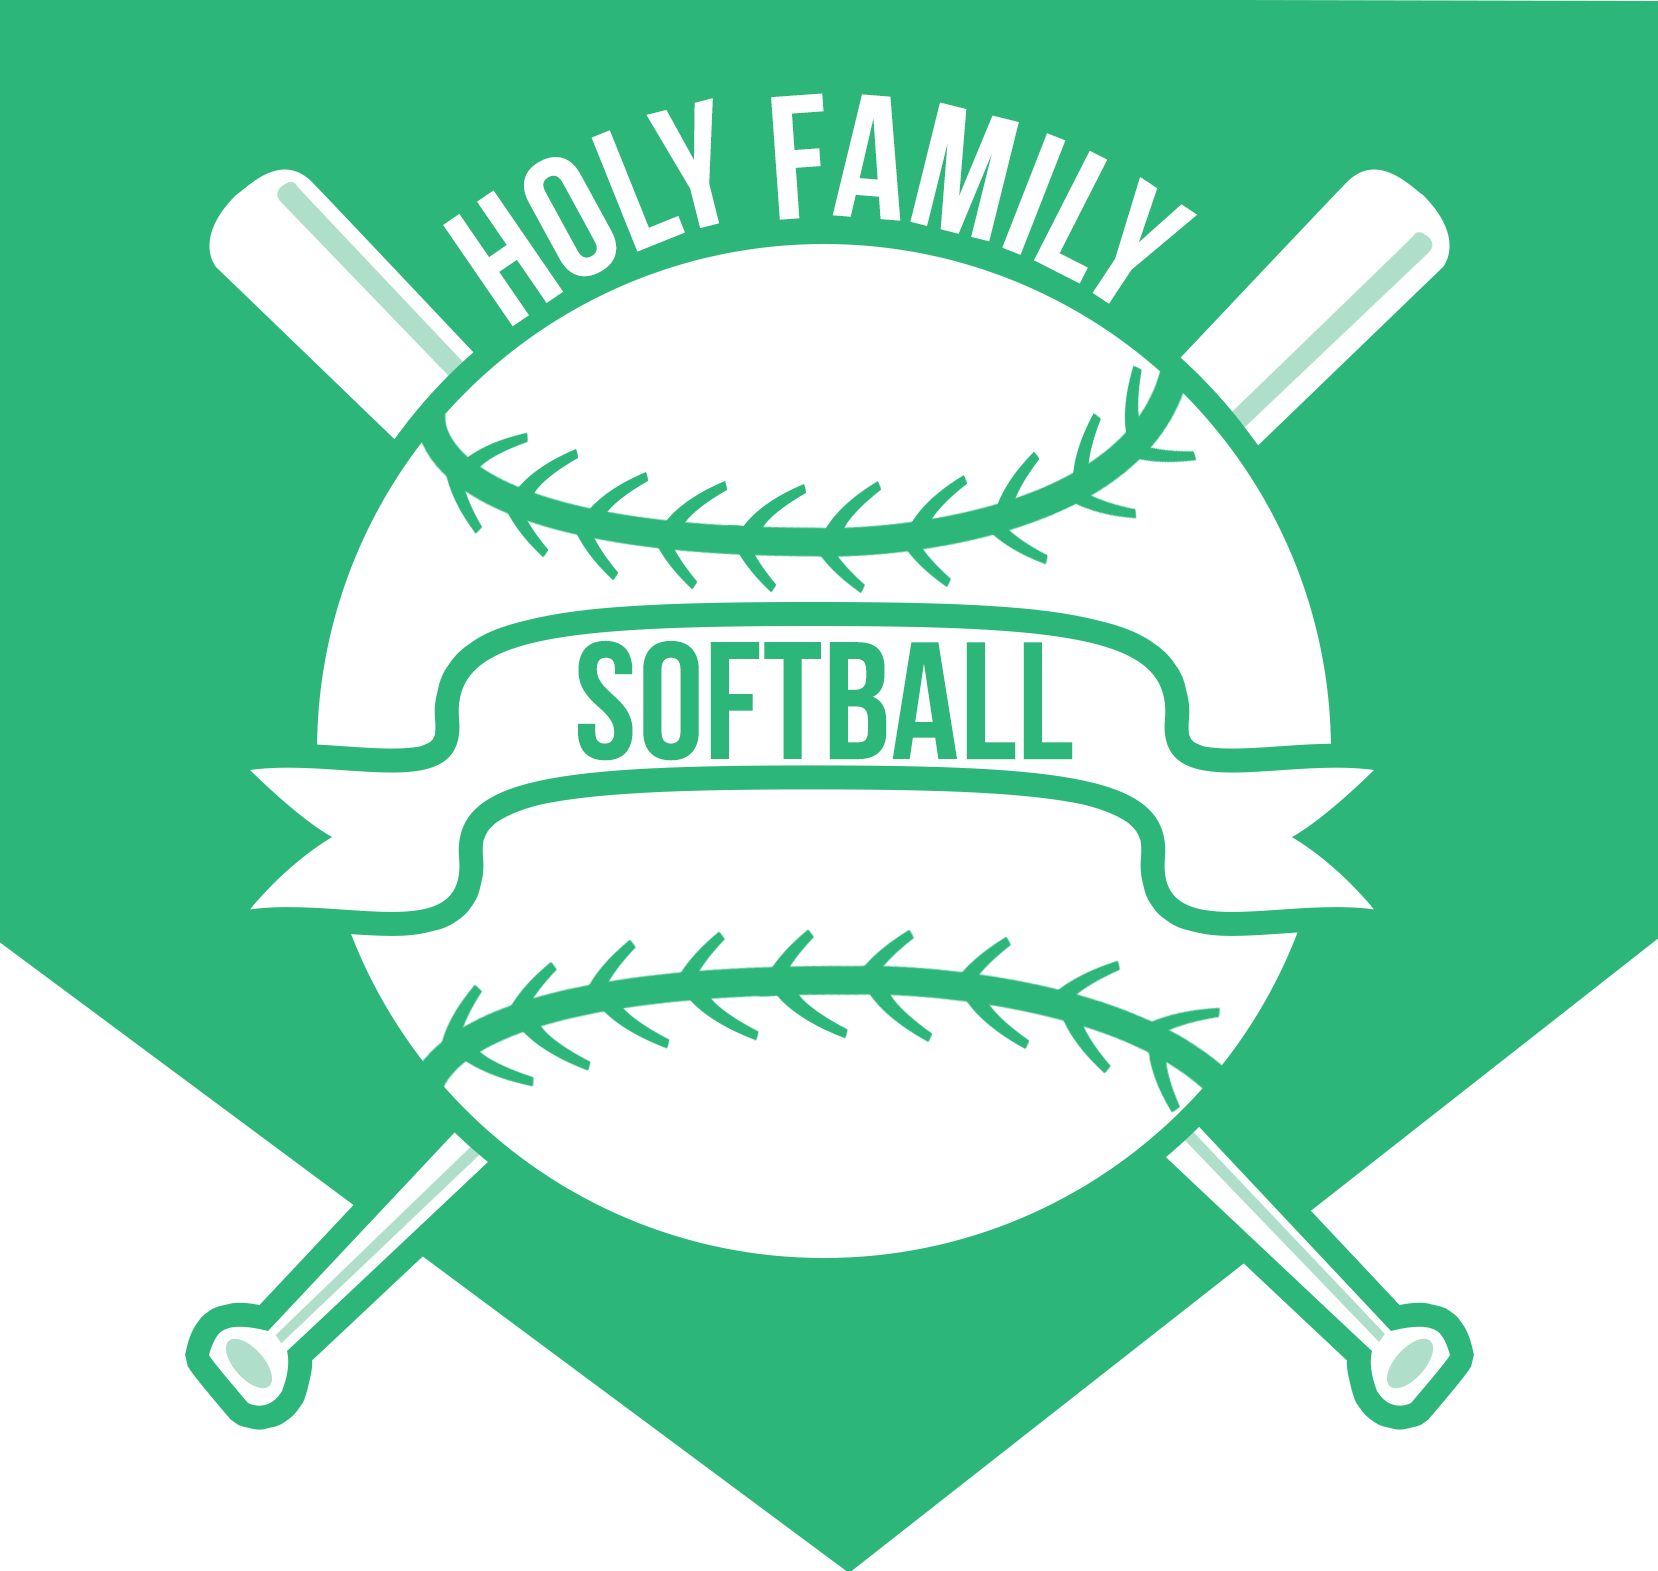 Cool Softball Logo - Softball | Church of the Holy Family